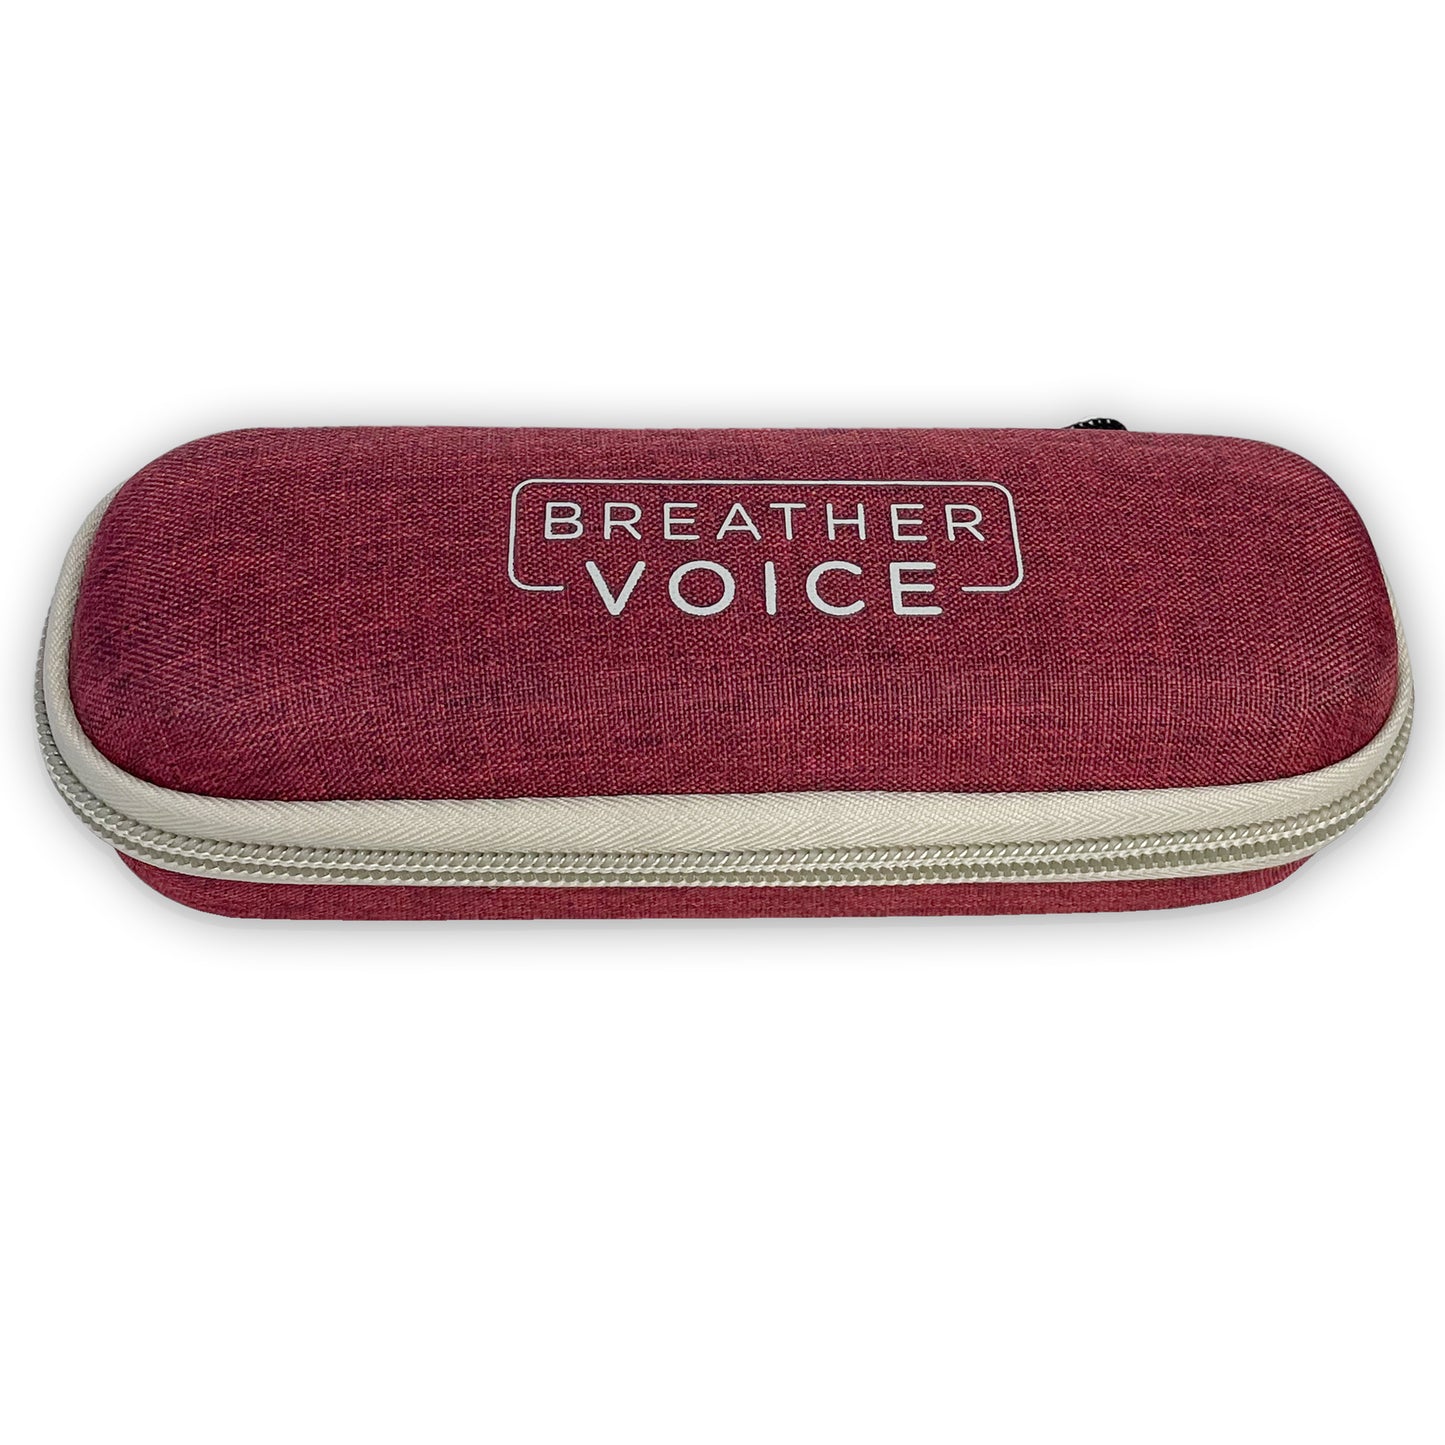 Breather Voice Case